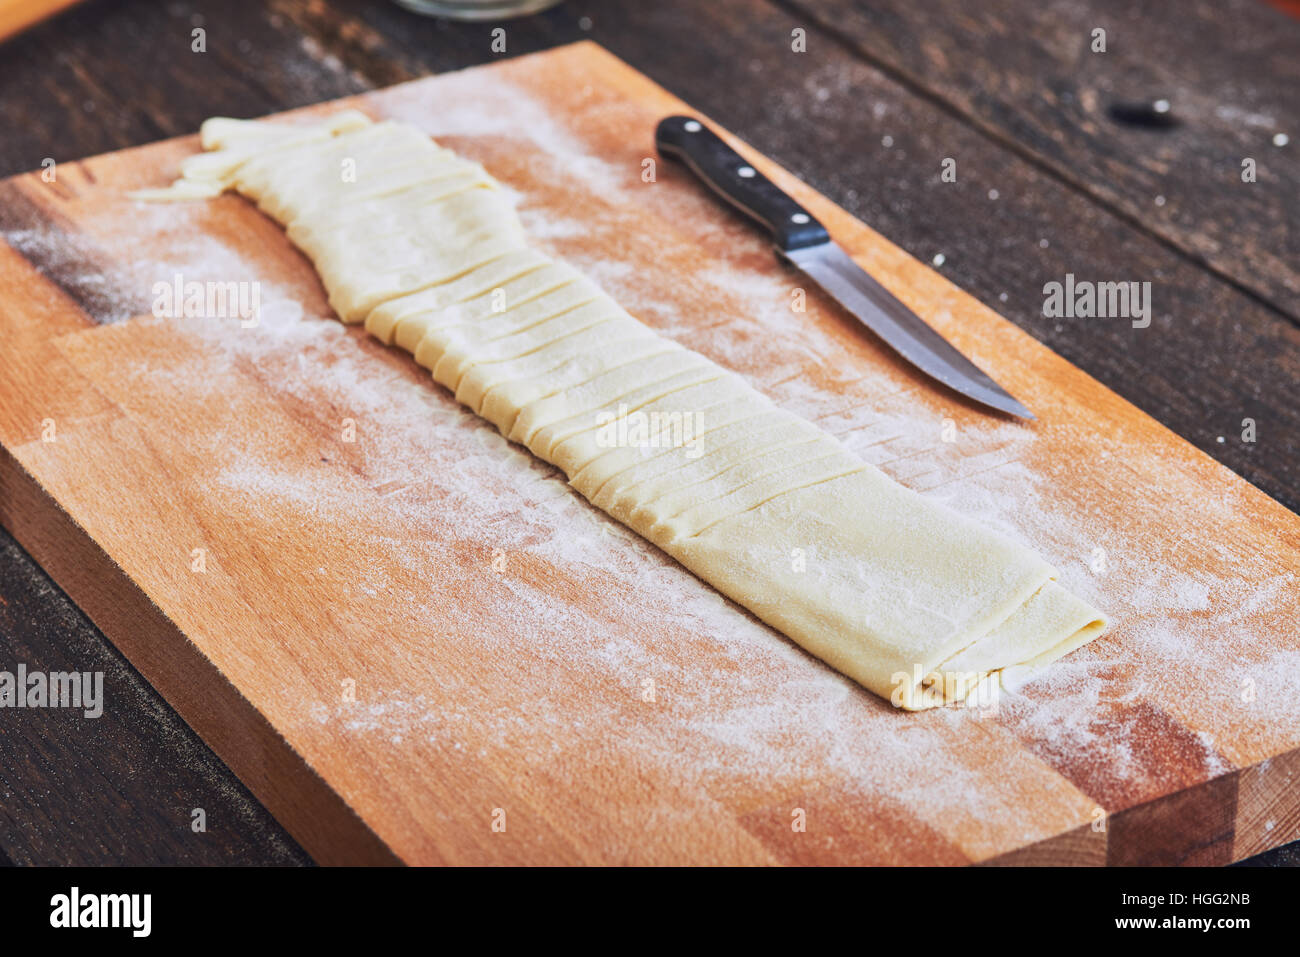 Making handmade pasta on wooden table Stock Photo